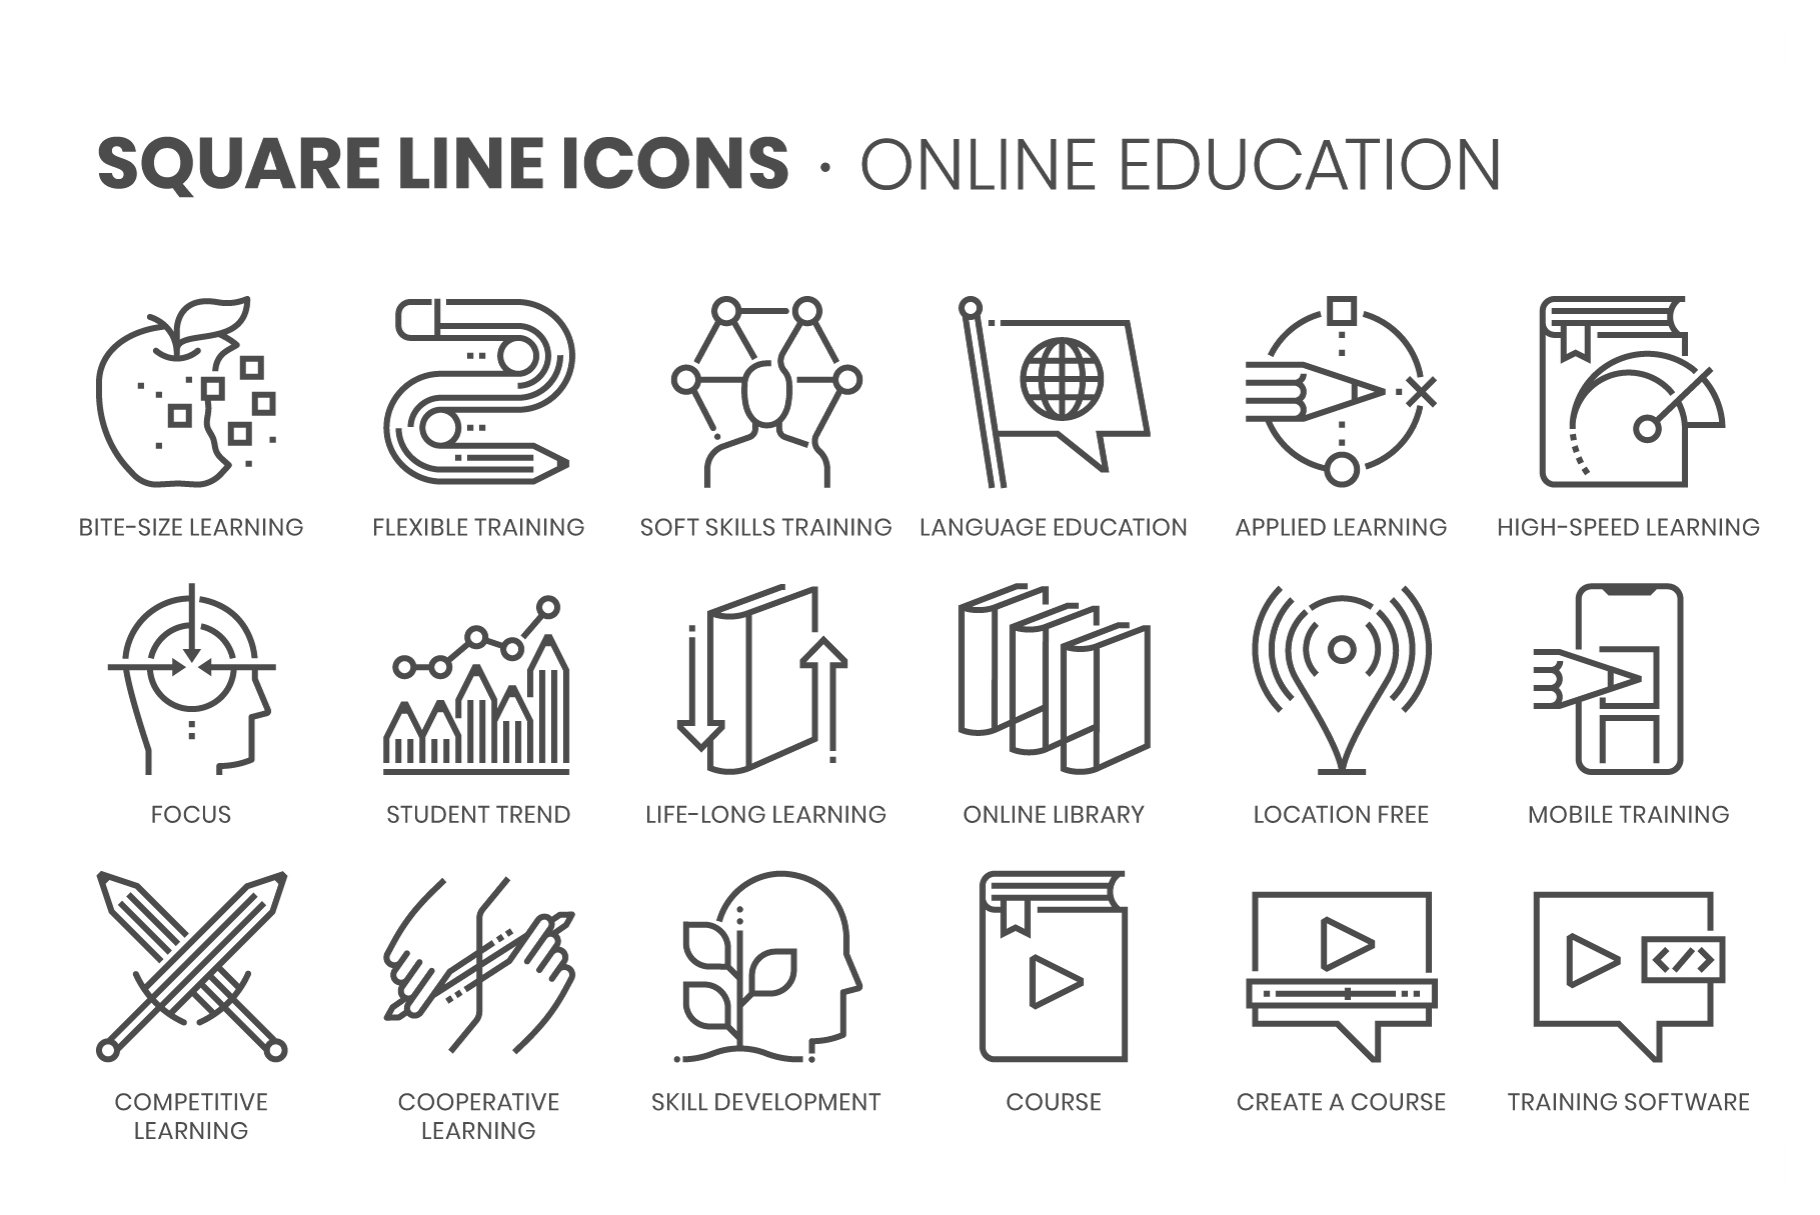 sq44 online education 2